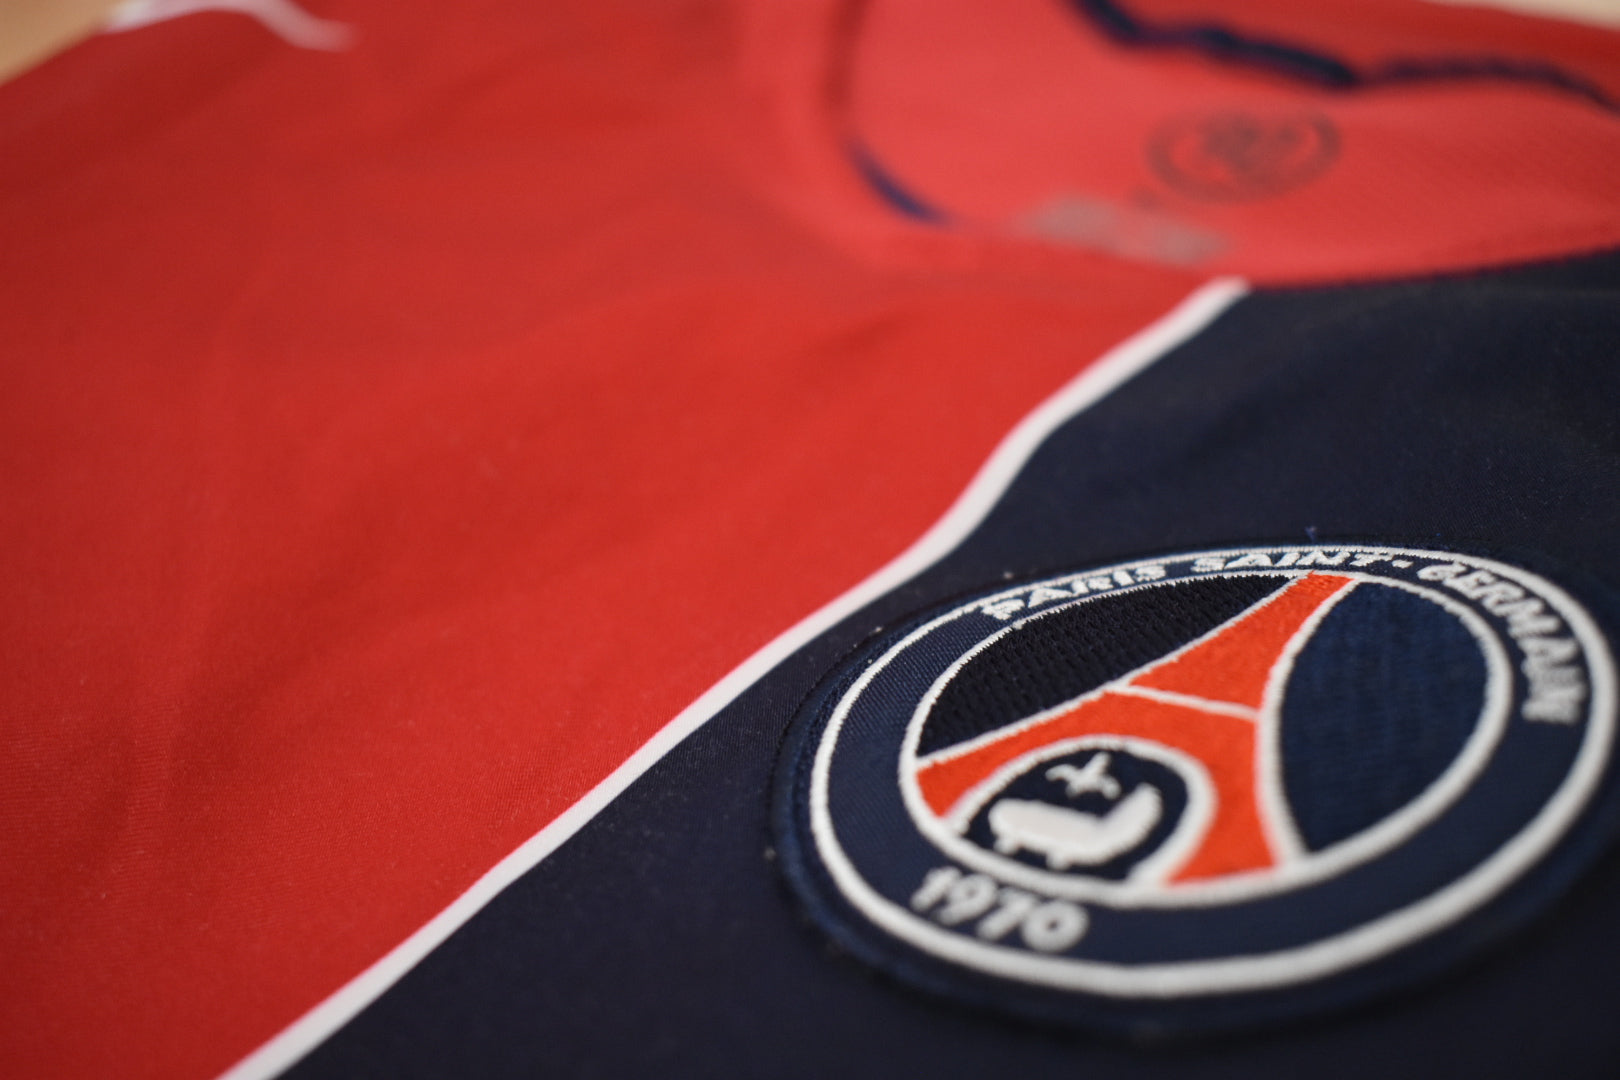 2005-06 Paris Saint-Germain Away Shirt *w/tags* L 195744